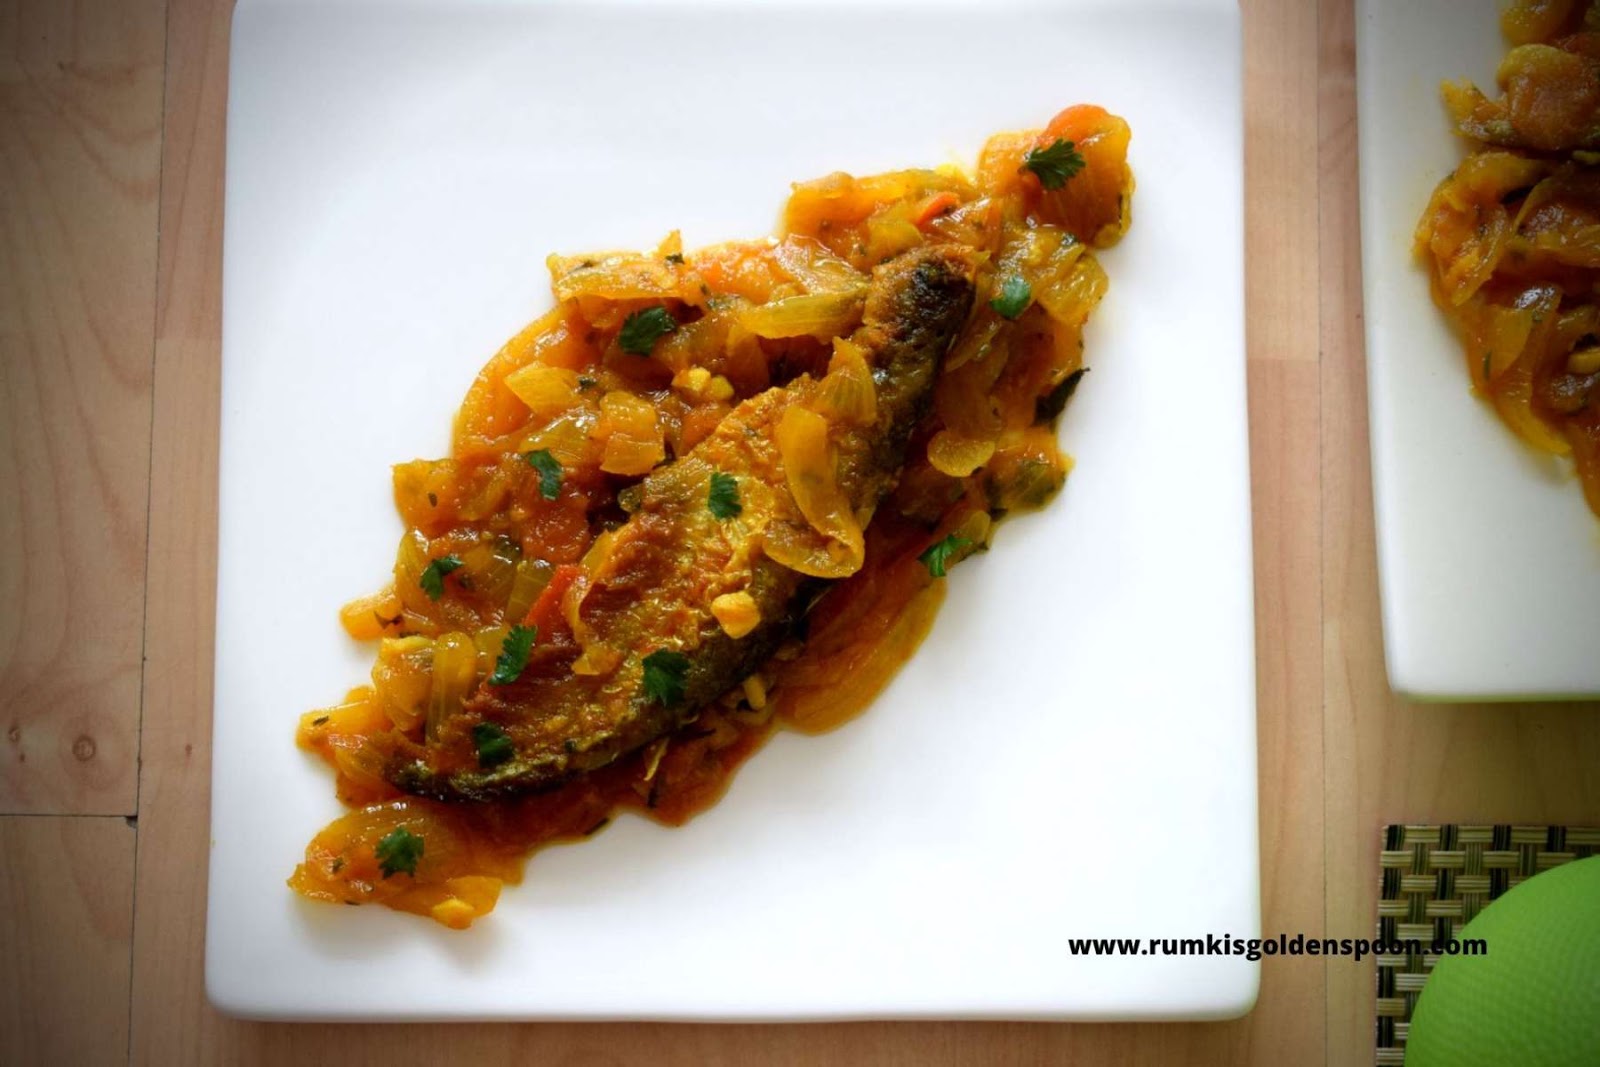 Pabda fish, tan Pabda fish recipe, Pabda fish recipes, Pabda fish curry recipe, bengali fish curry recipe, fish curry recipe, fish curries, Pabda fish curry, Pabda Macher Bhuna, Rumki's Golden Spoon